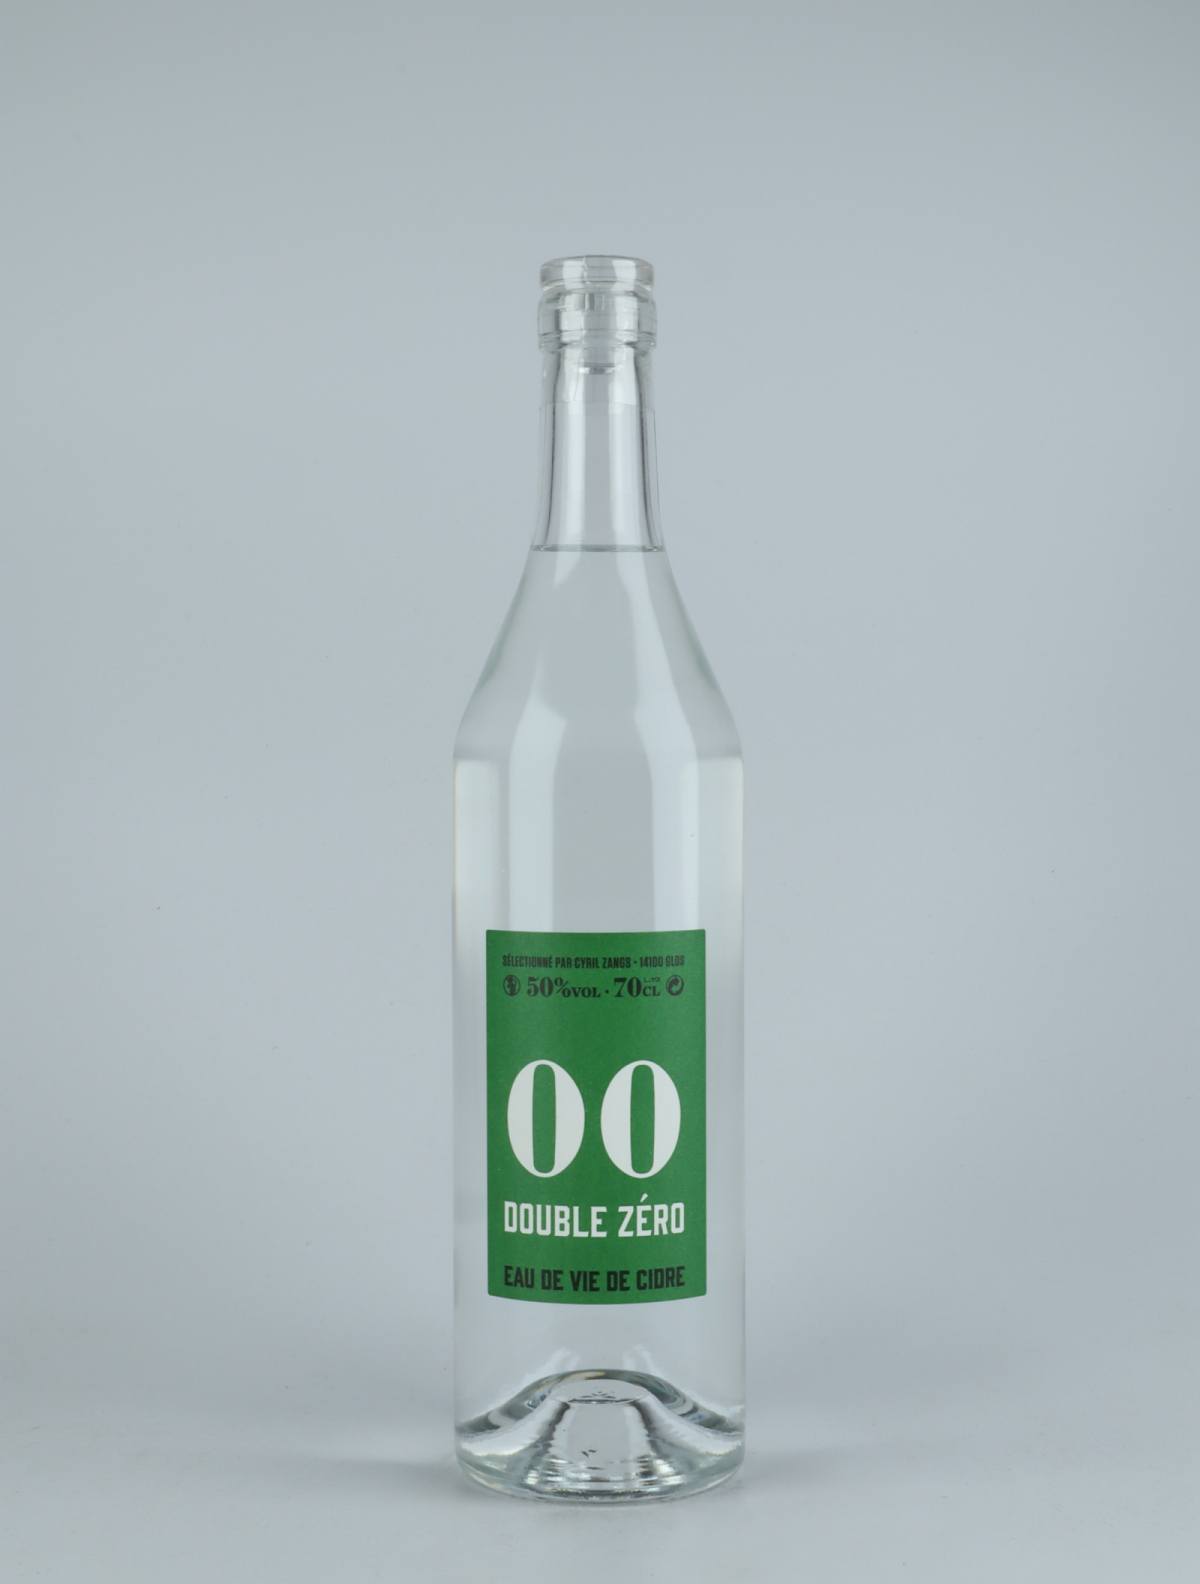 A bottle N.V. Eau de Vie de Cidre - Double Zéro Spirits from Cyril Zangs, Normandy in France